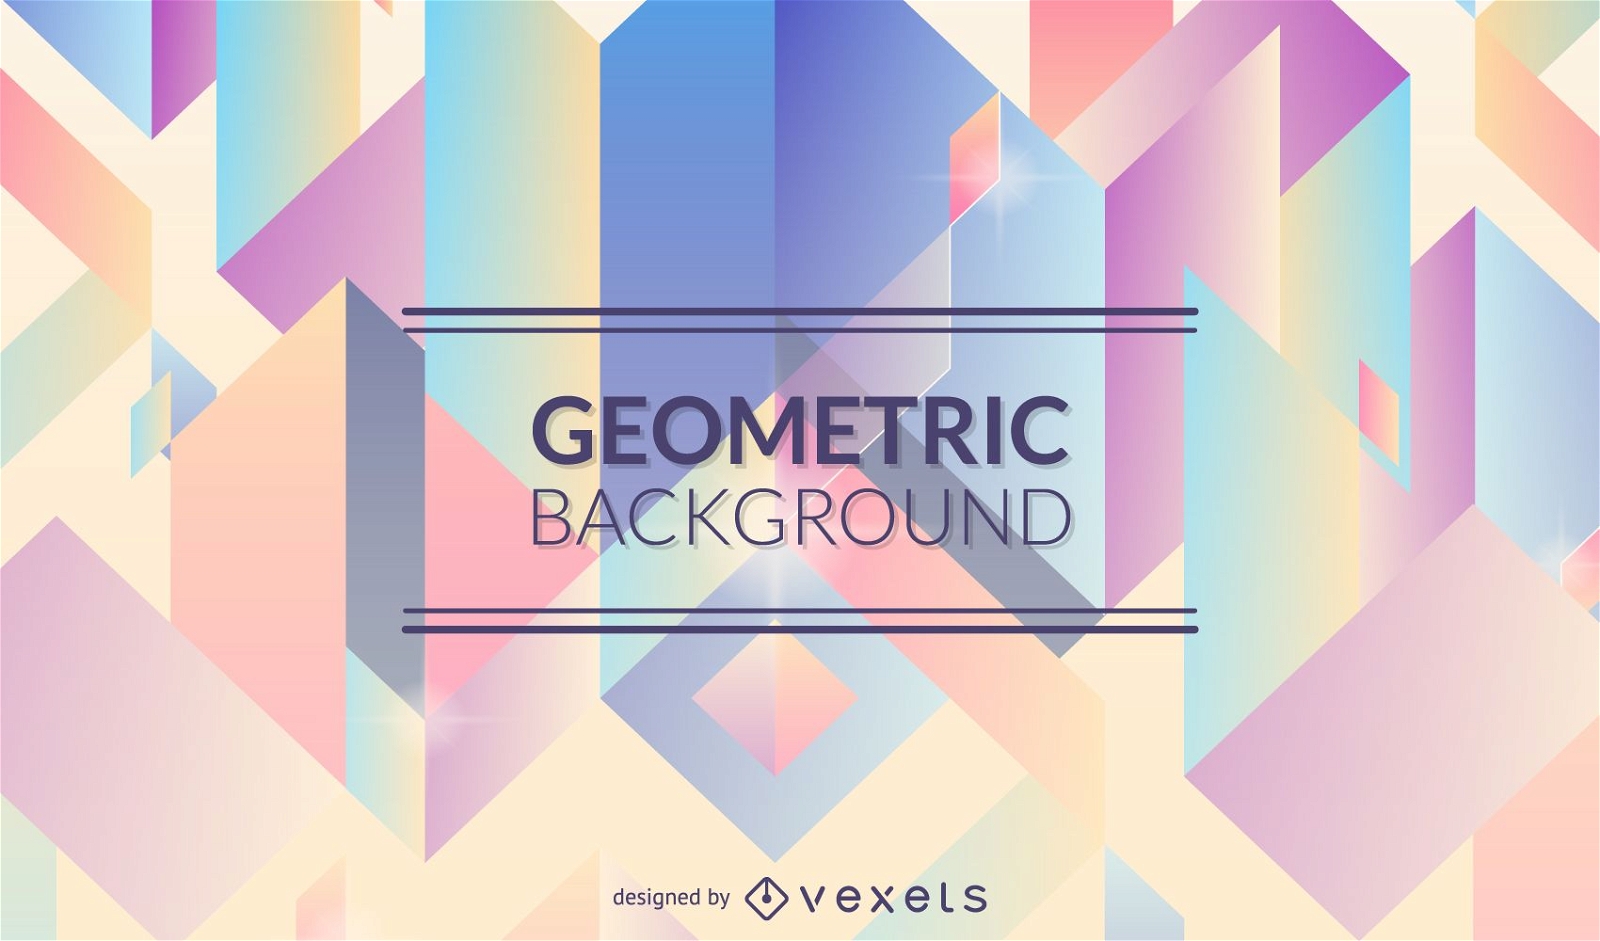 Geometric background in pastel tones